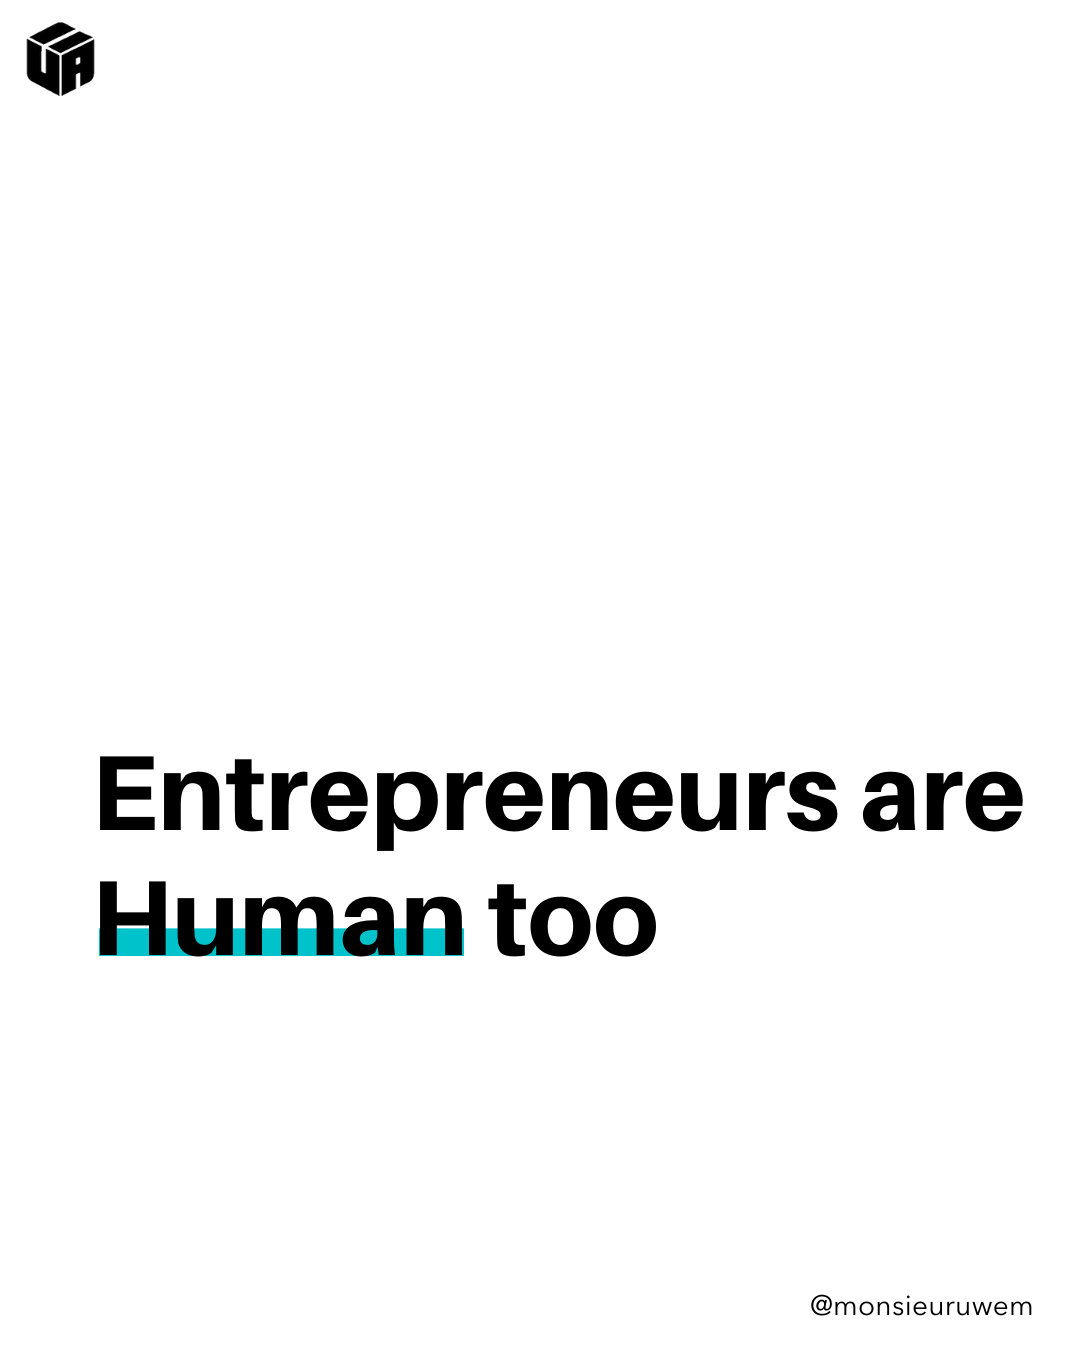 Entrepreneurs are human